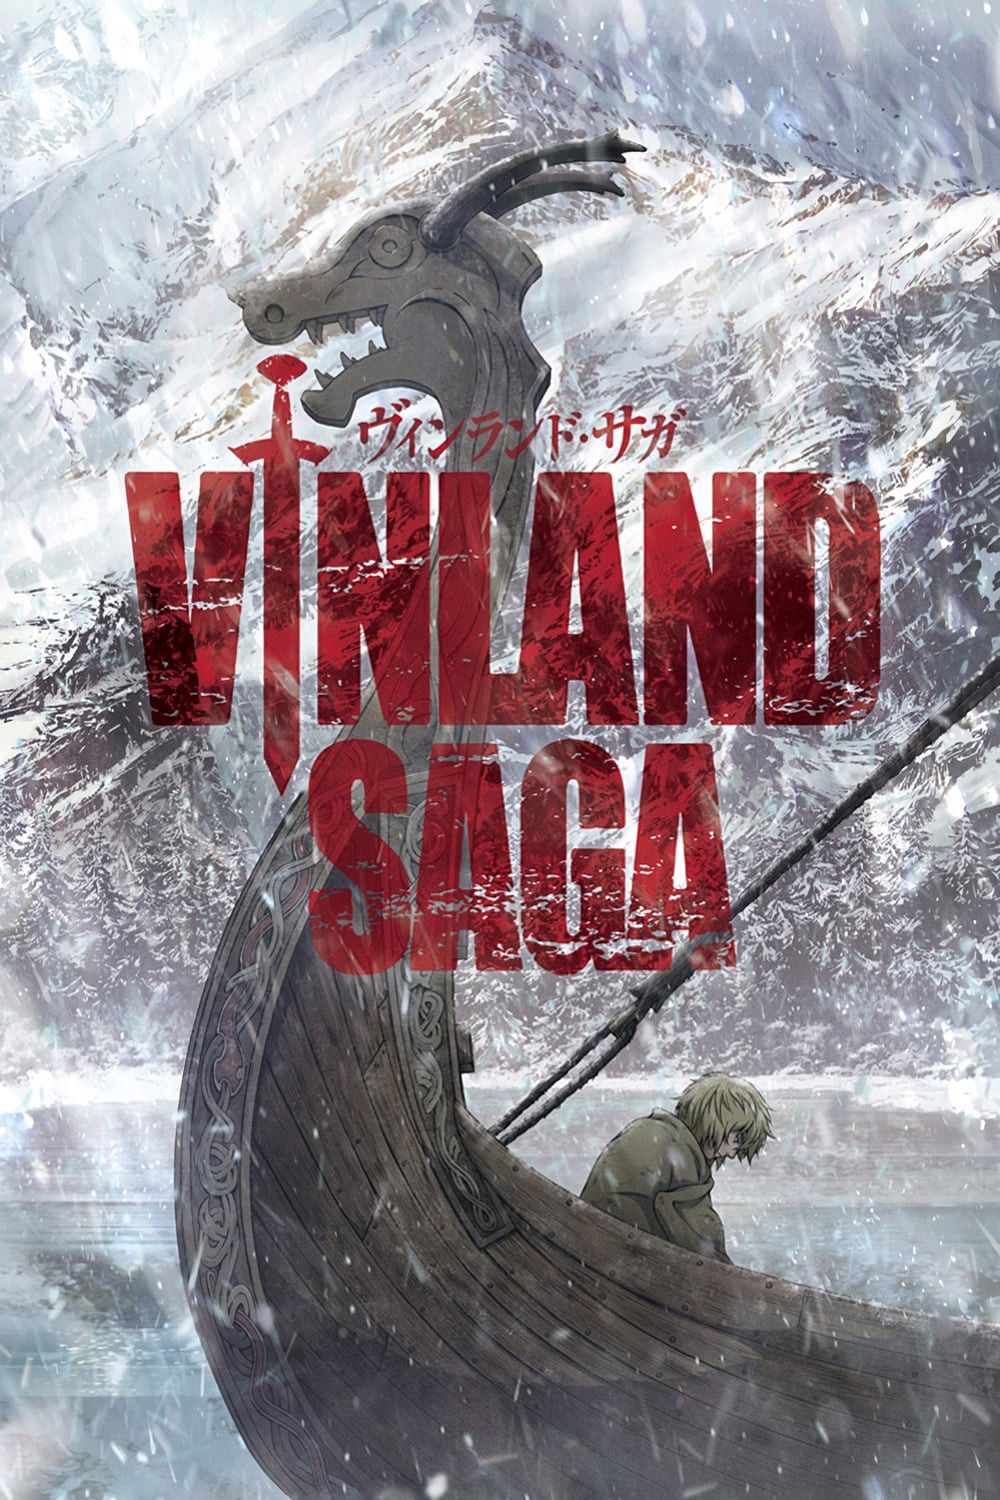 Manga Thrill on X: Vinland Saga season 2 penultimate episode just